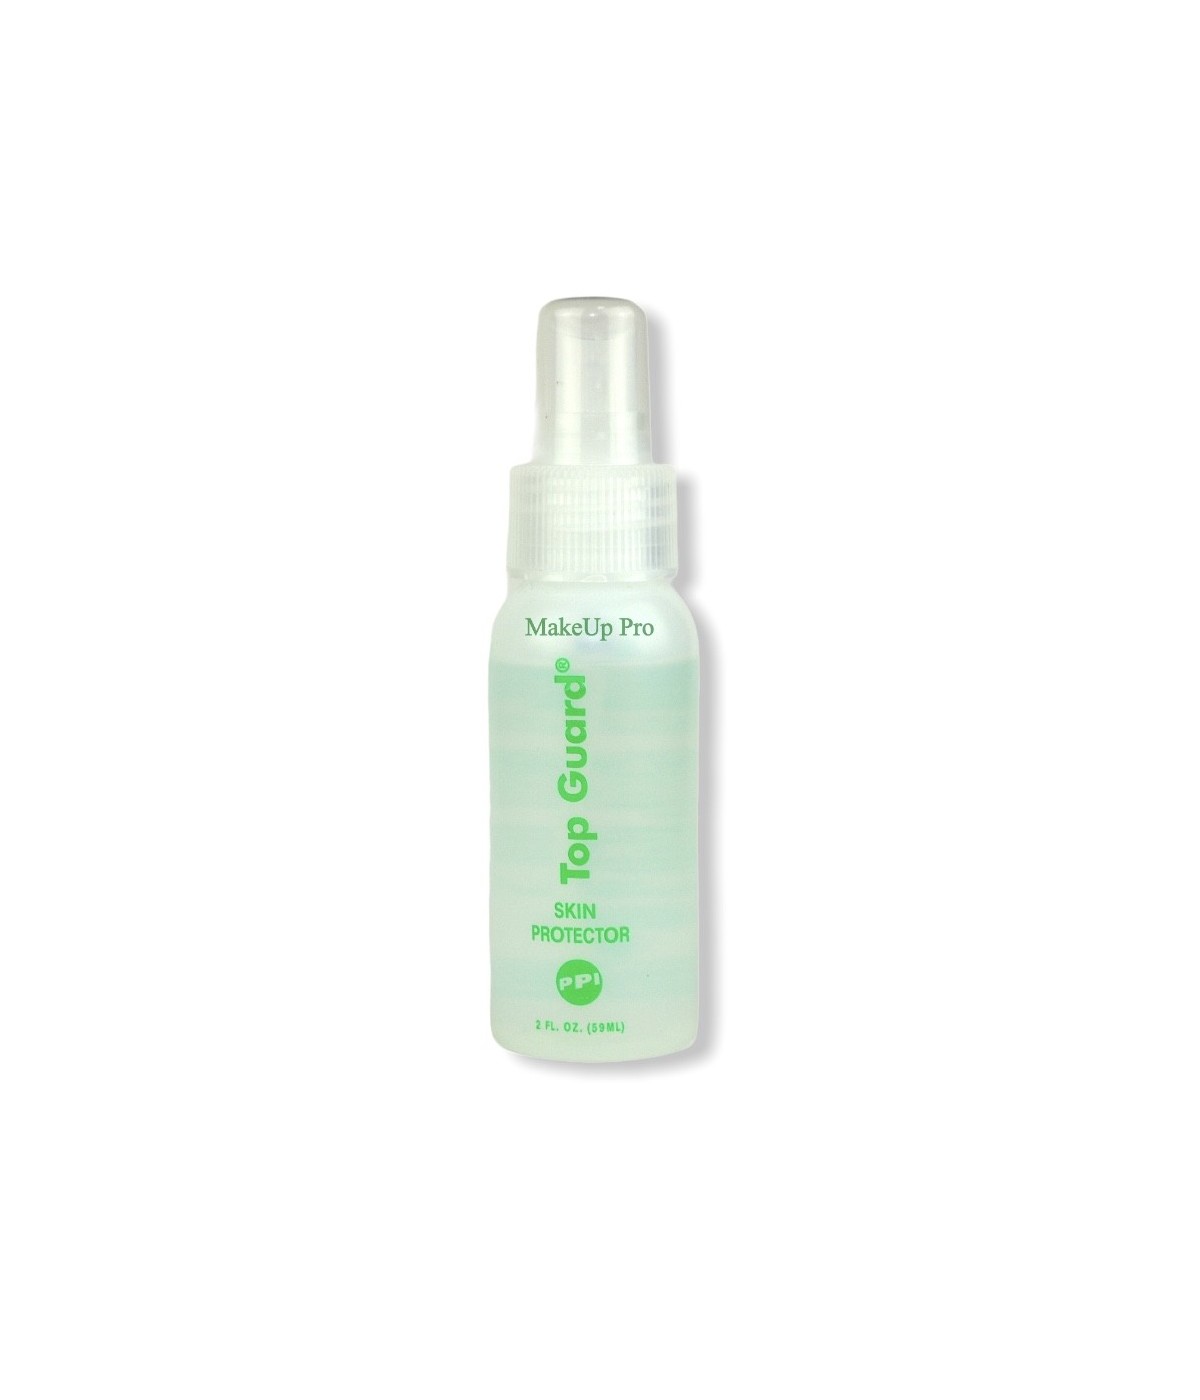 PPI Top Guard Skin Protector Spray,  2oz./59ml